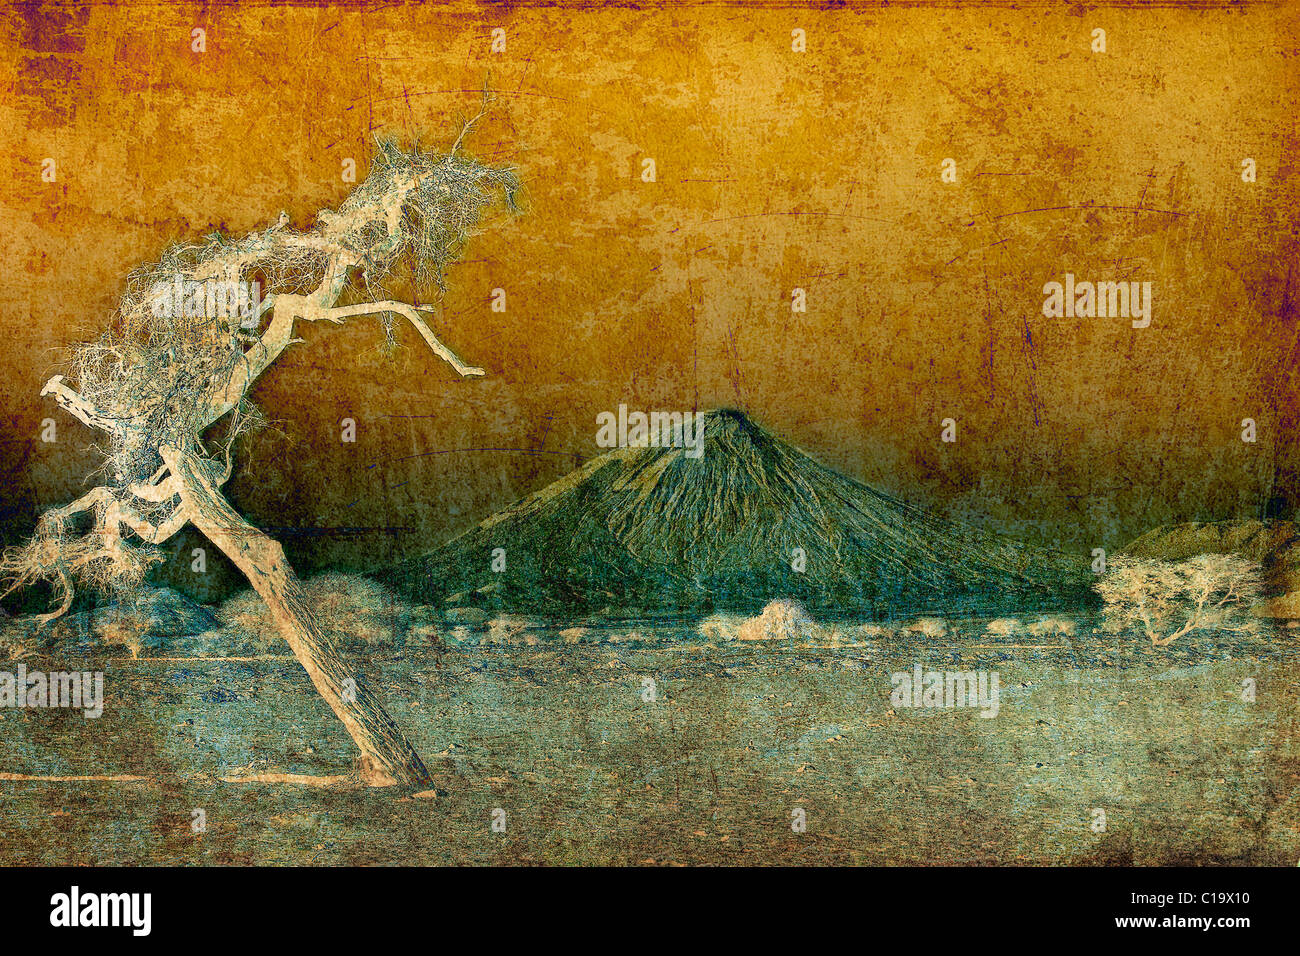 Texture image of Tanzania savannah with Ol Doinyo Lengai volcano in background Stock Photo